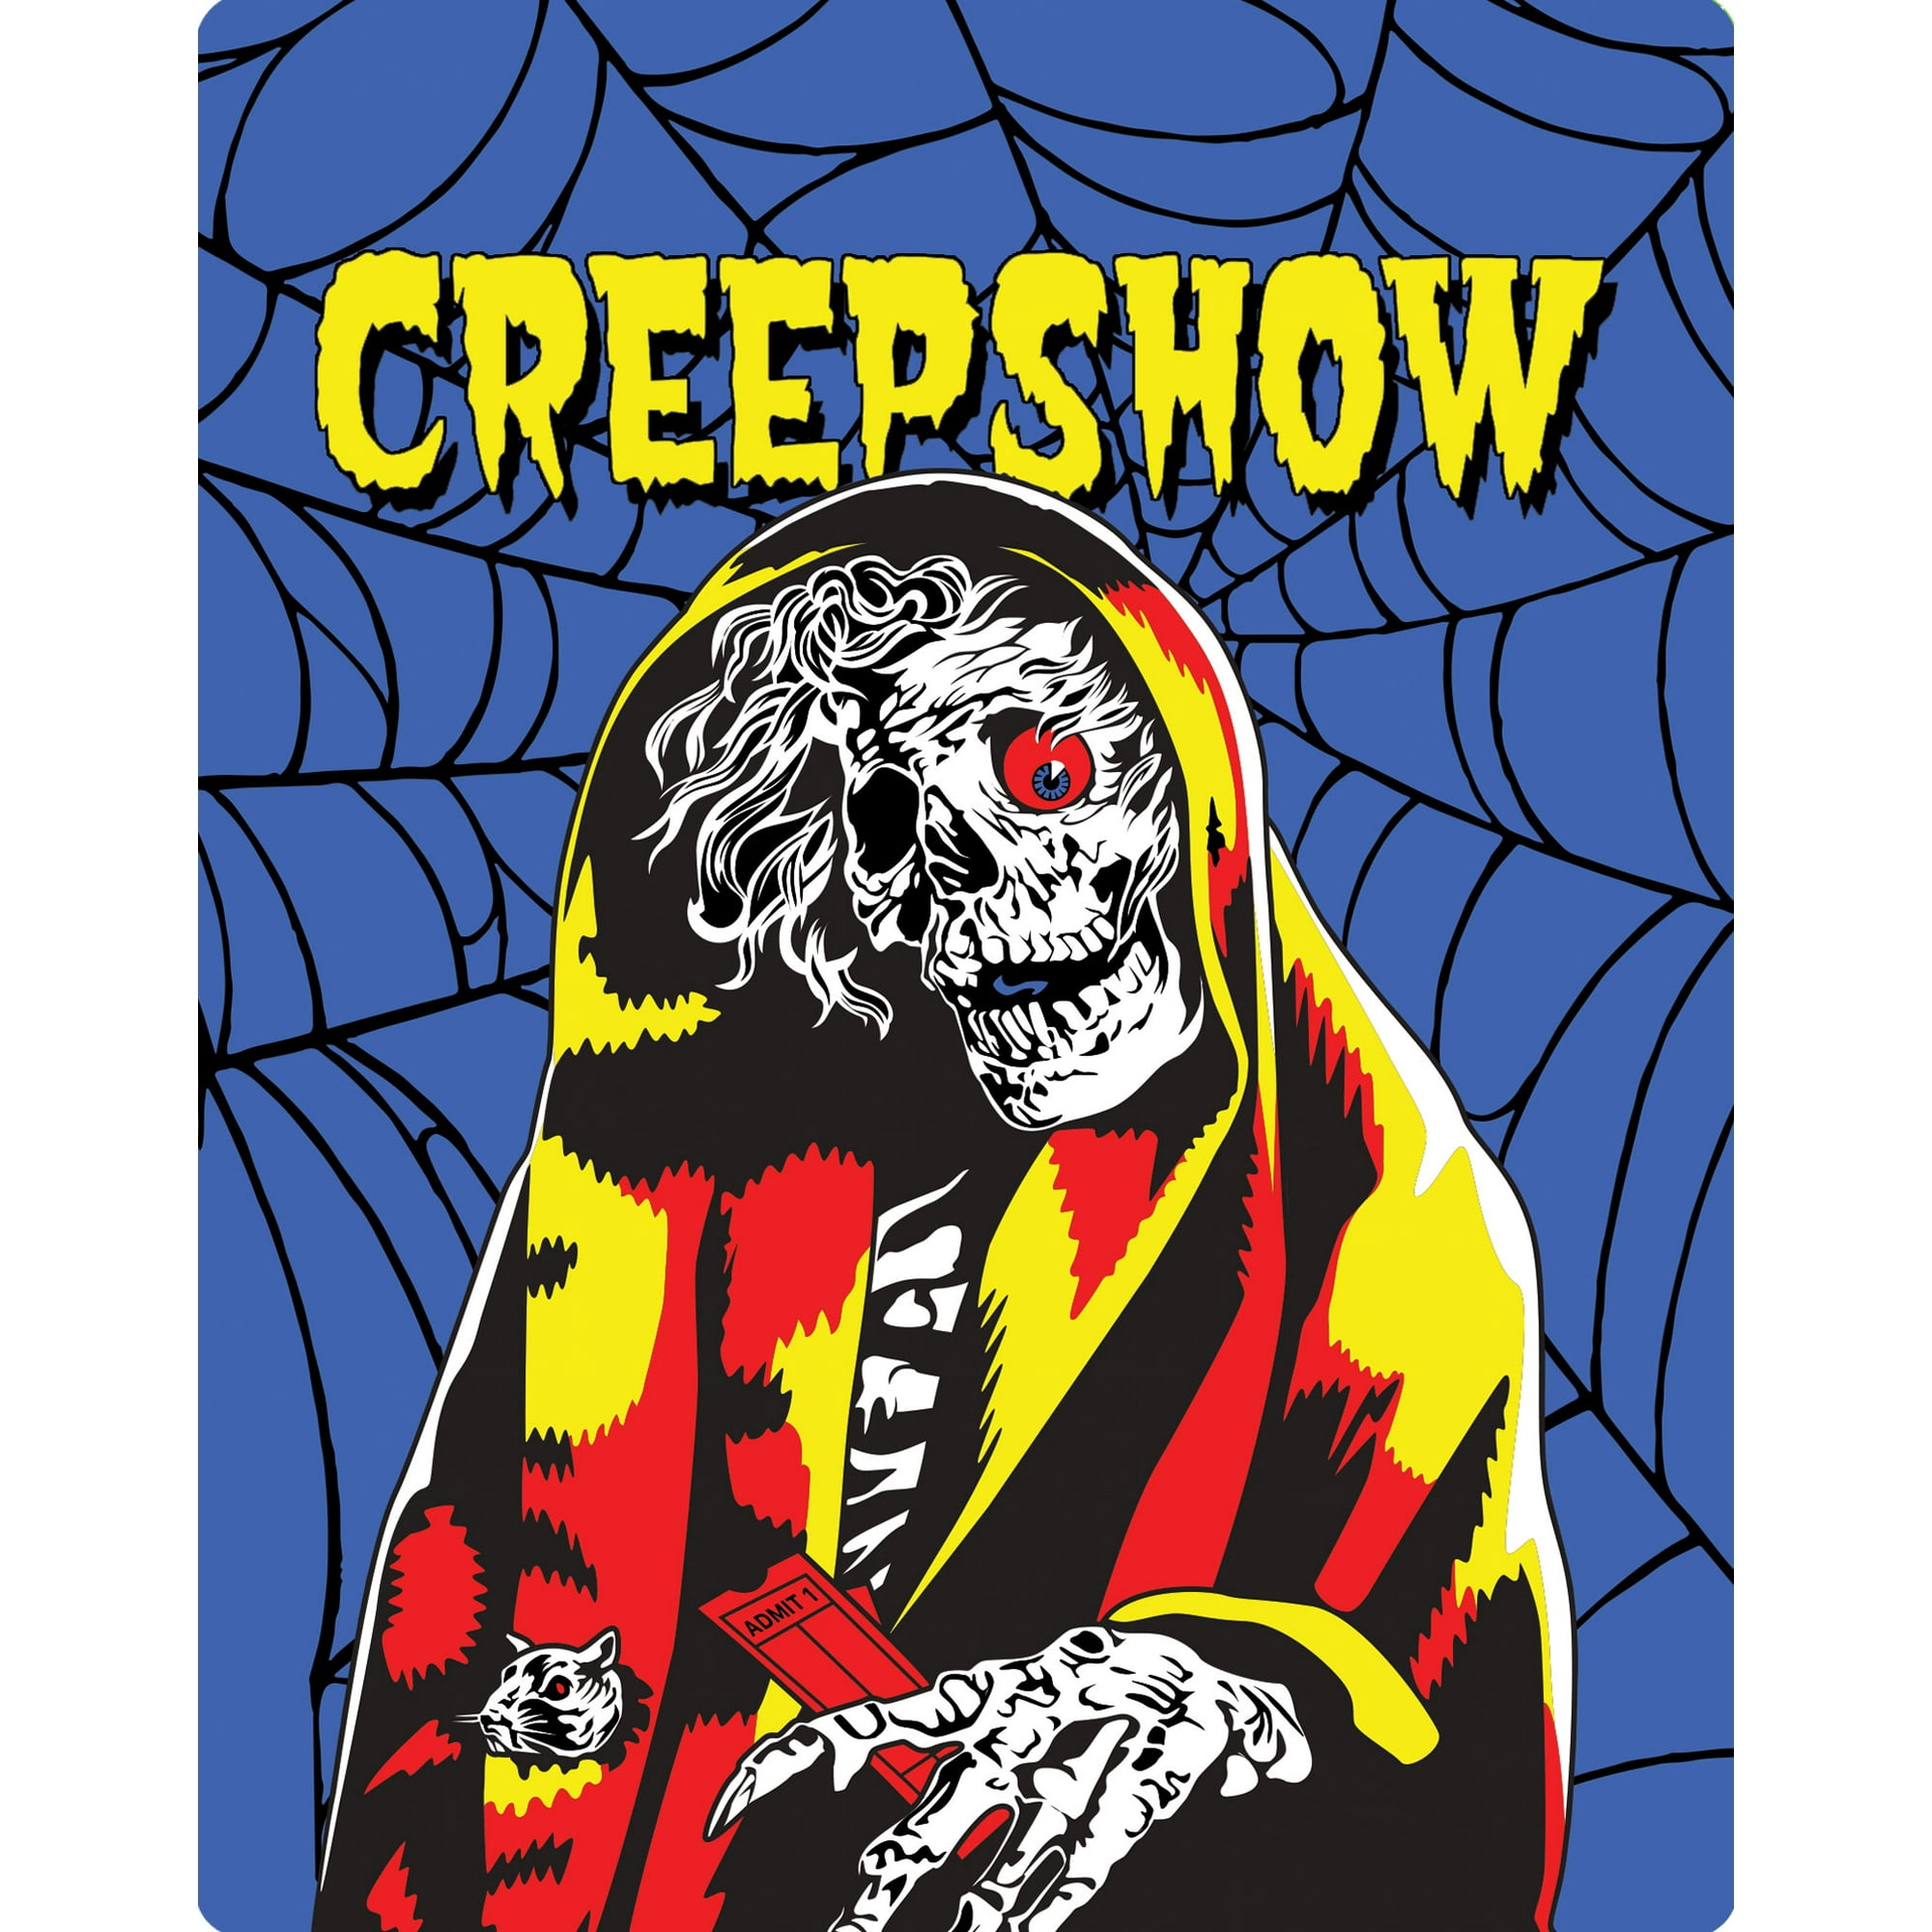 Creepshow: Collector's Edition (Walmart Exclusive) (Steelbook) (4K Ultra HD + Blu-ray)